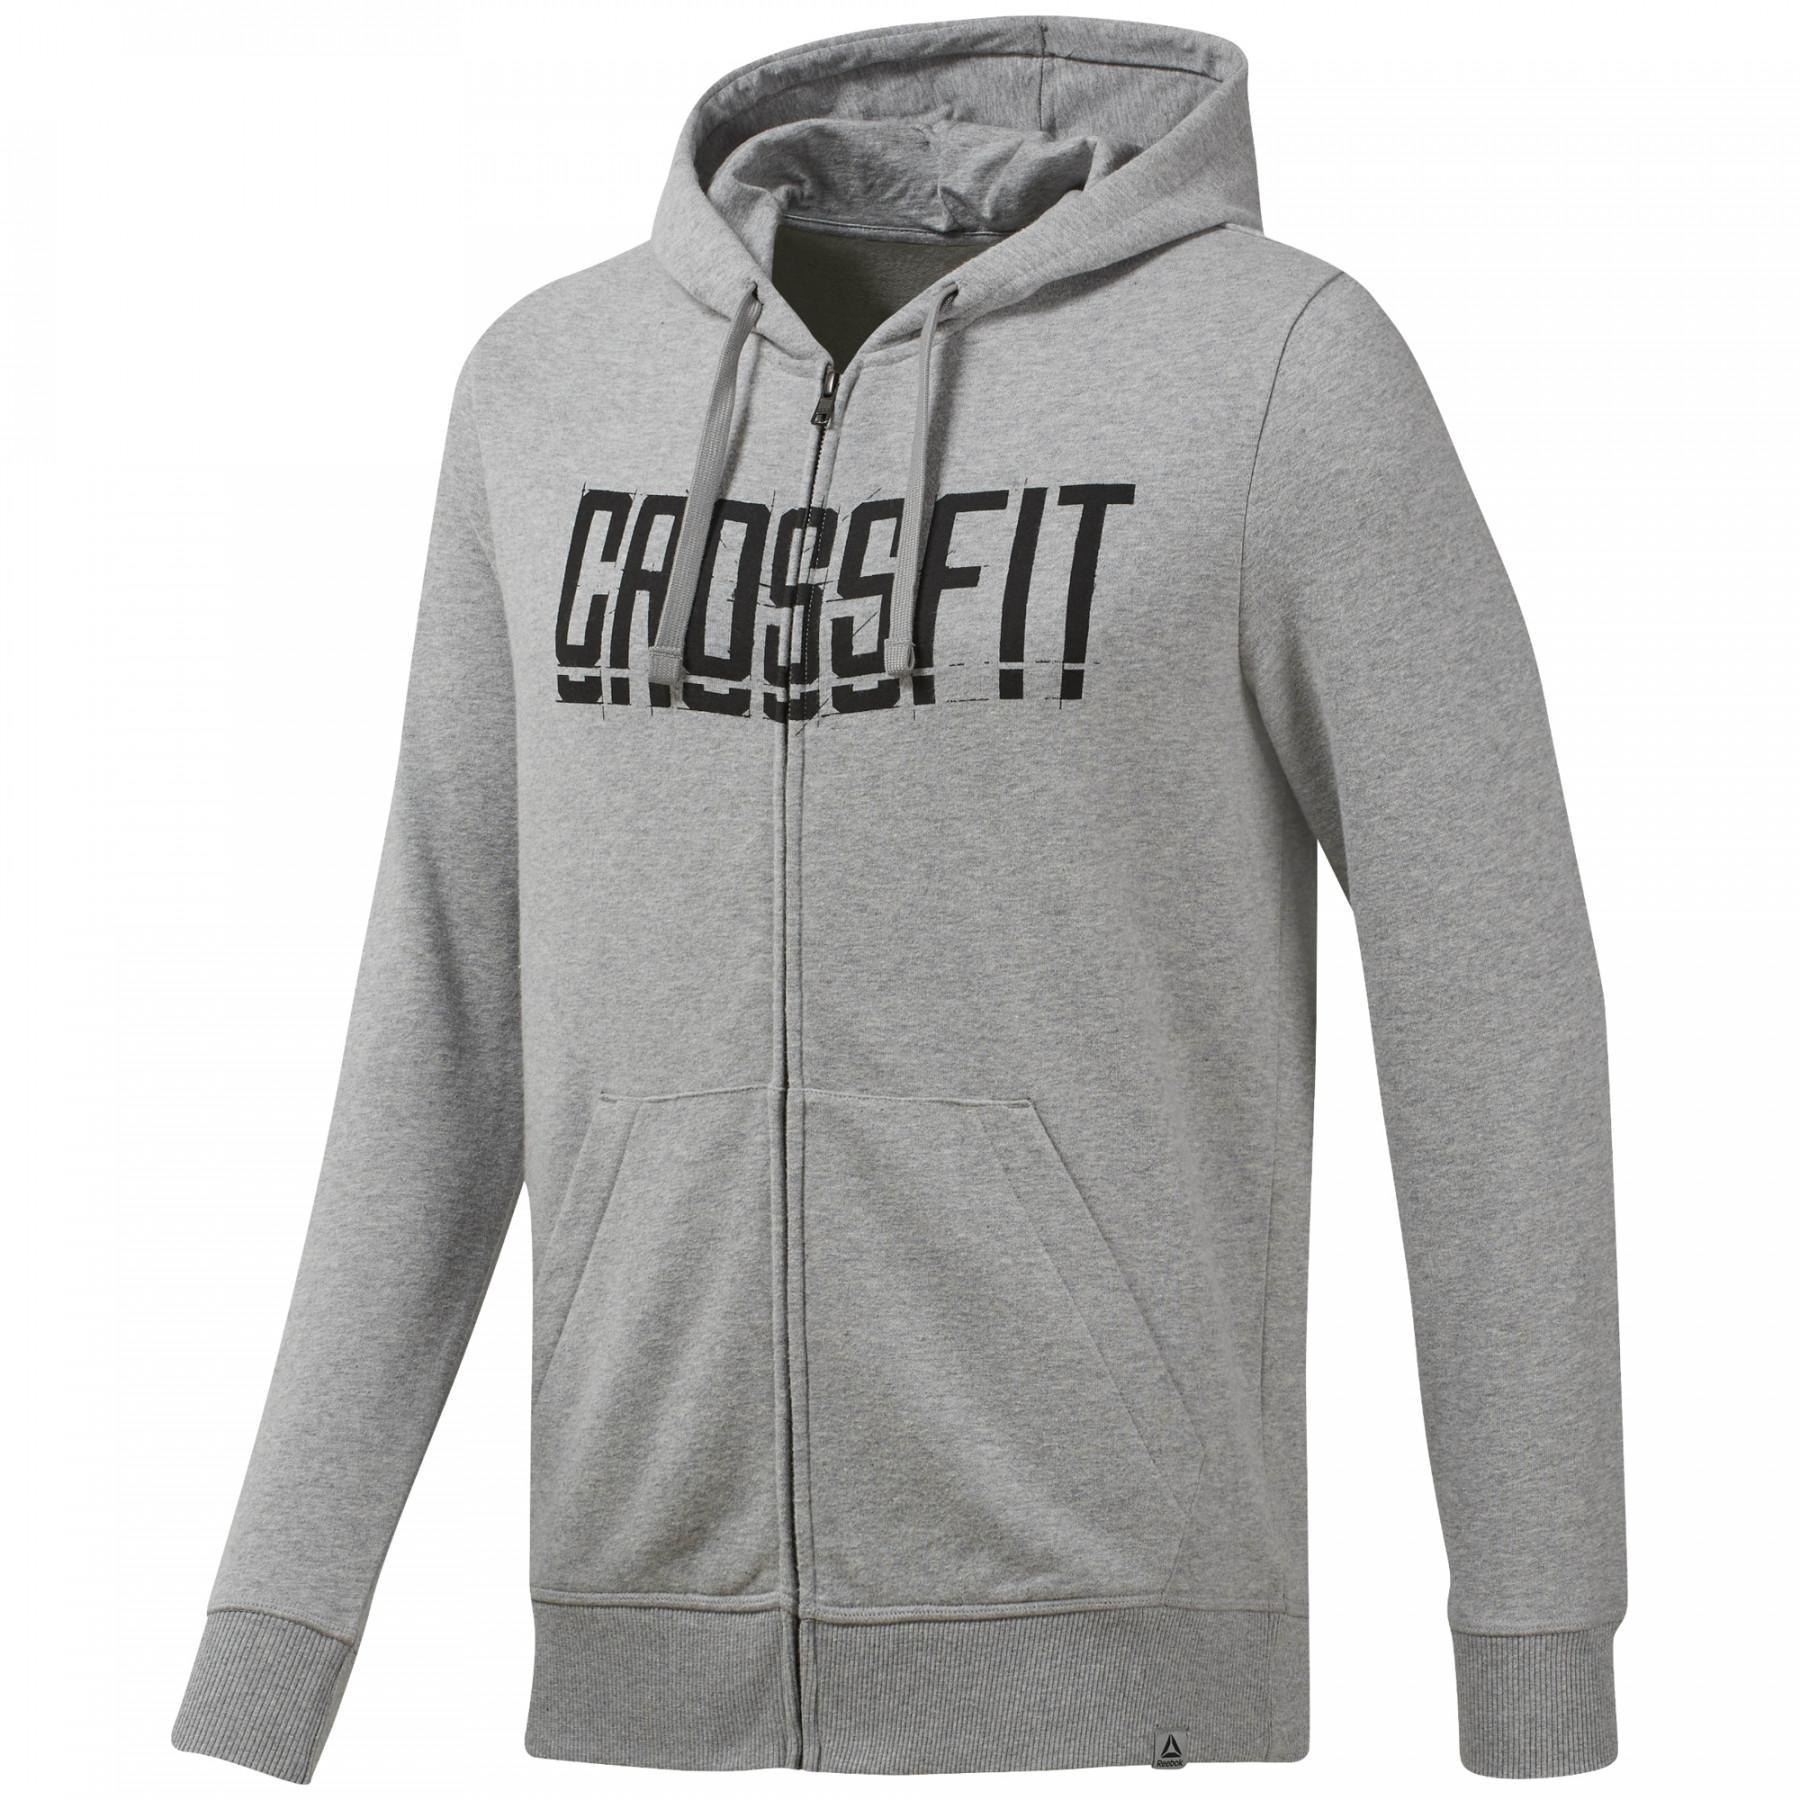 Veste à capuche Reebok CrossFit®